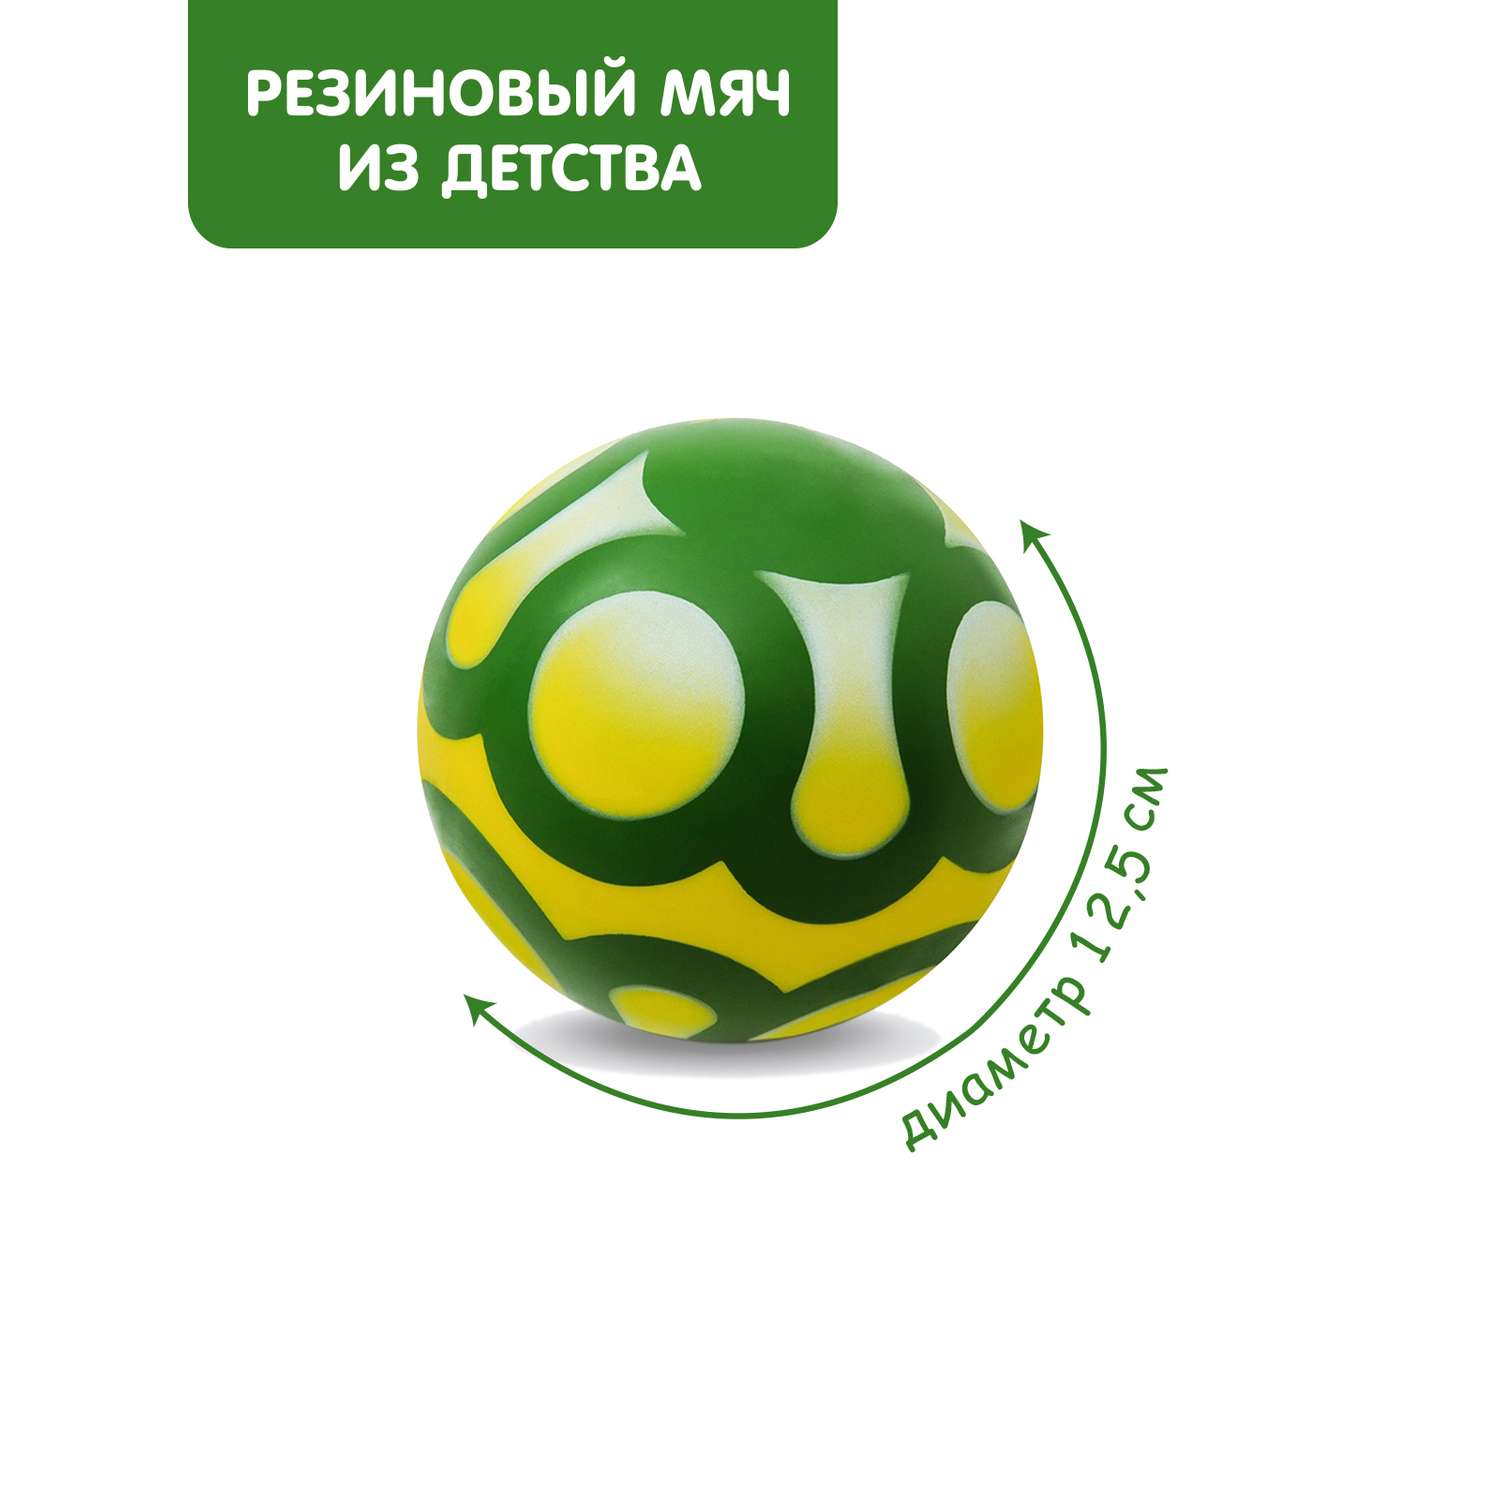 Мяч ЧАПАЕВ диаметр 125 мм Кувшинка зеленый желтый белый - фото 1